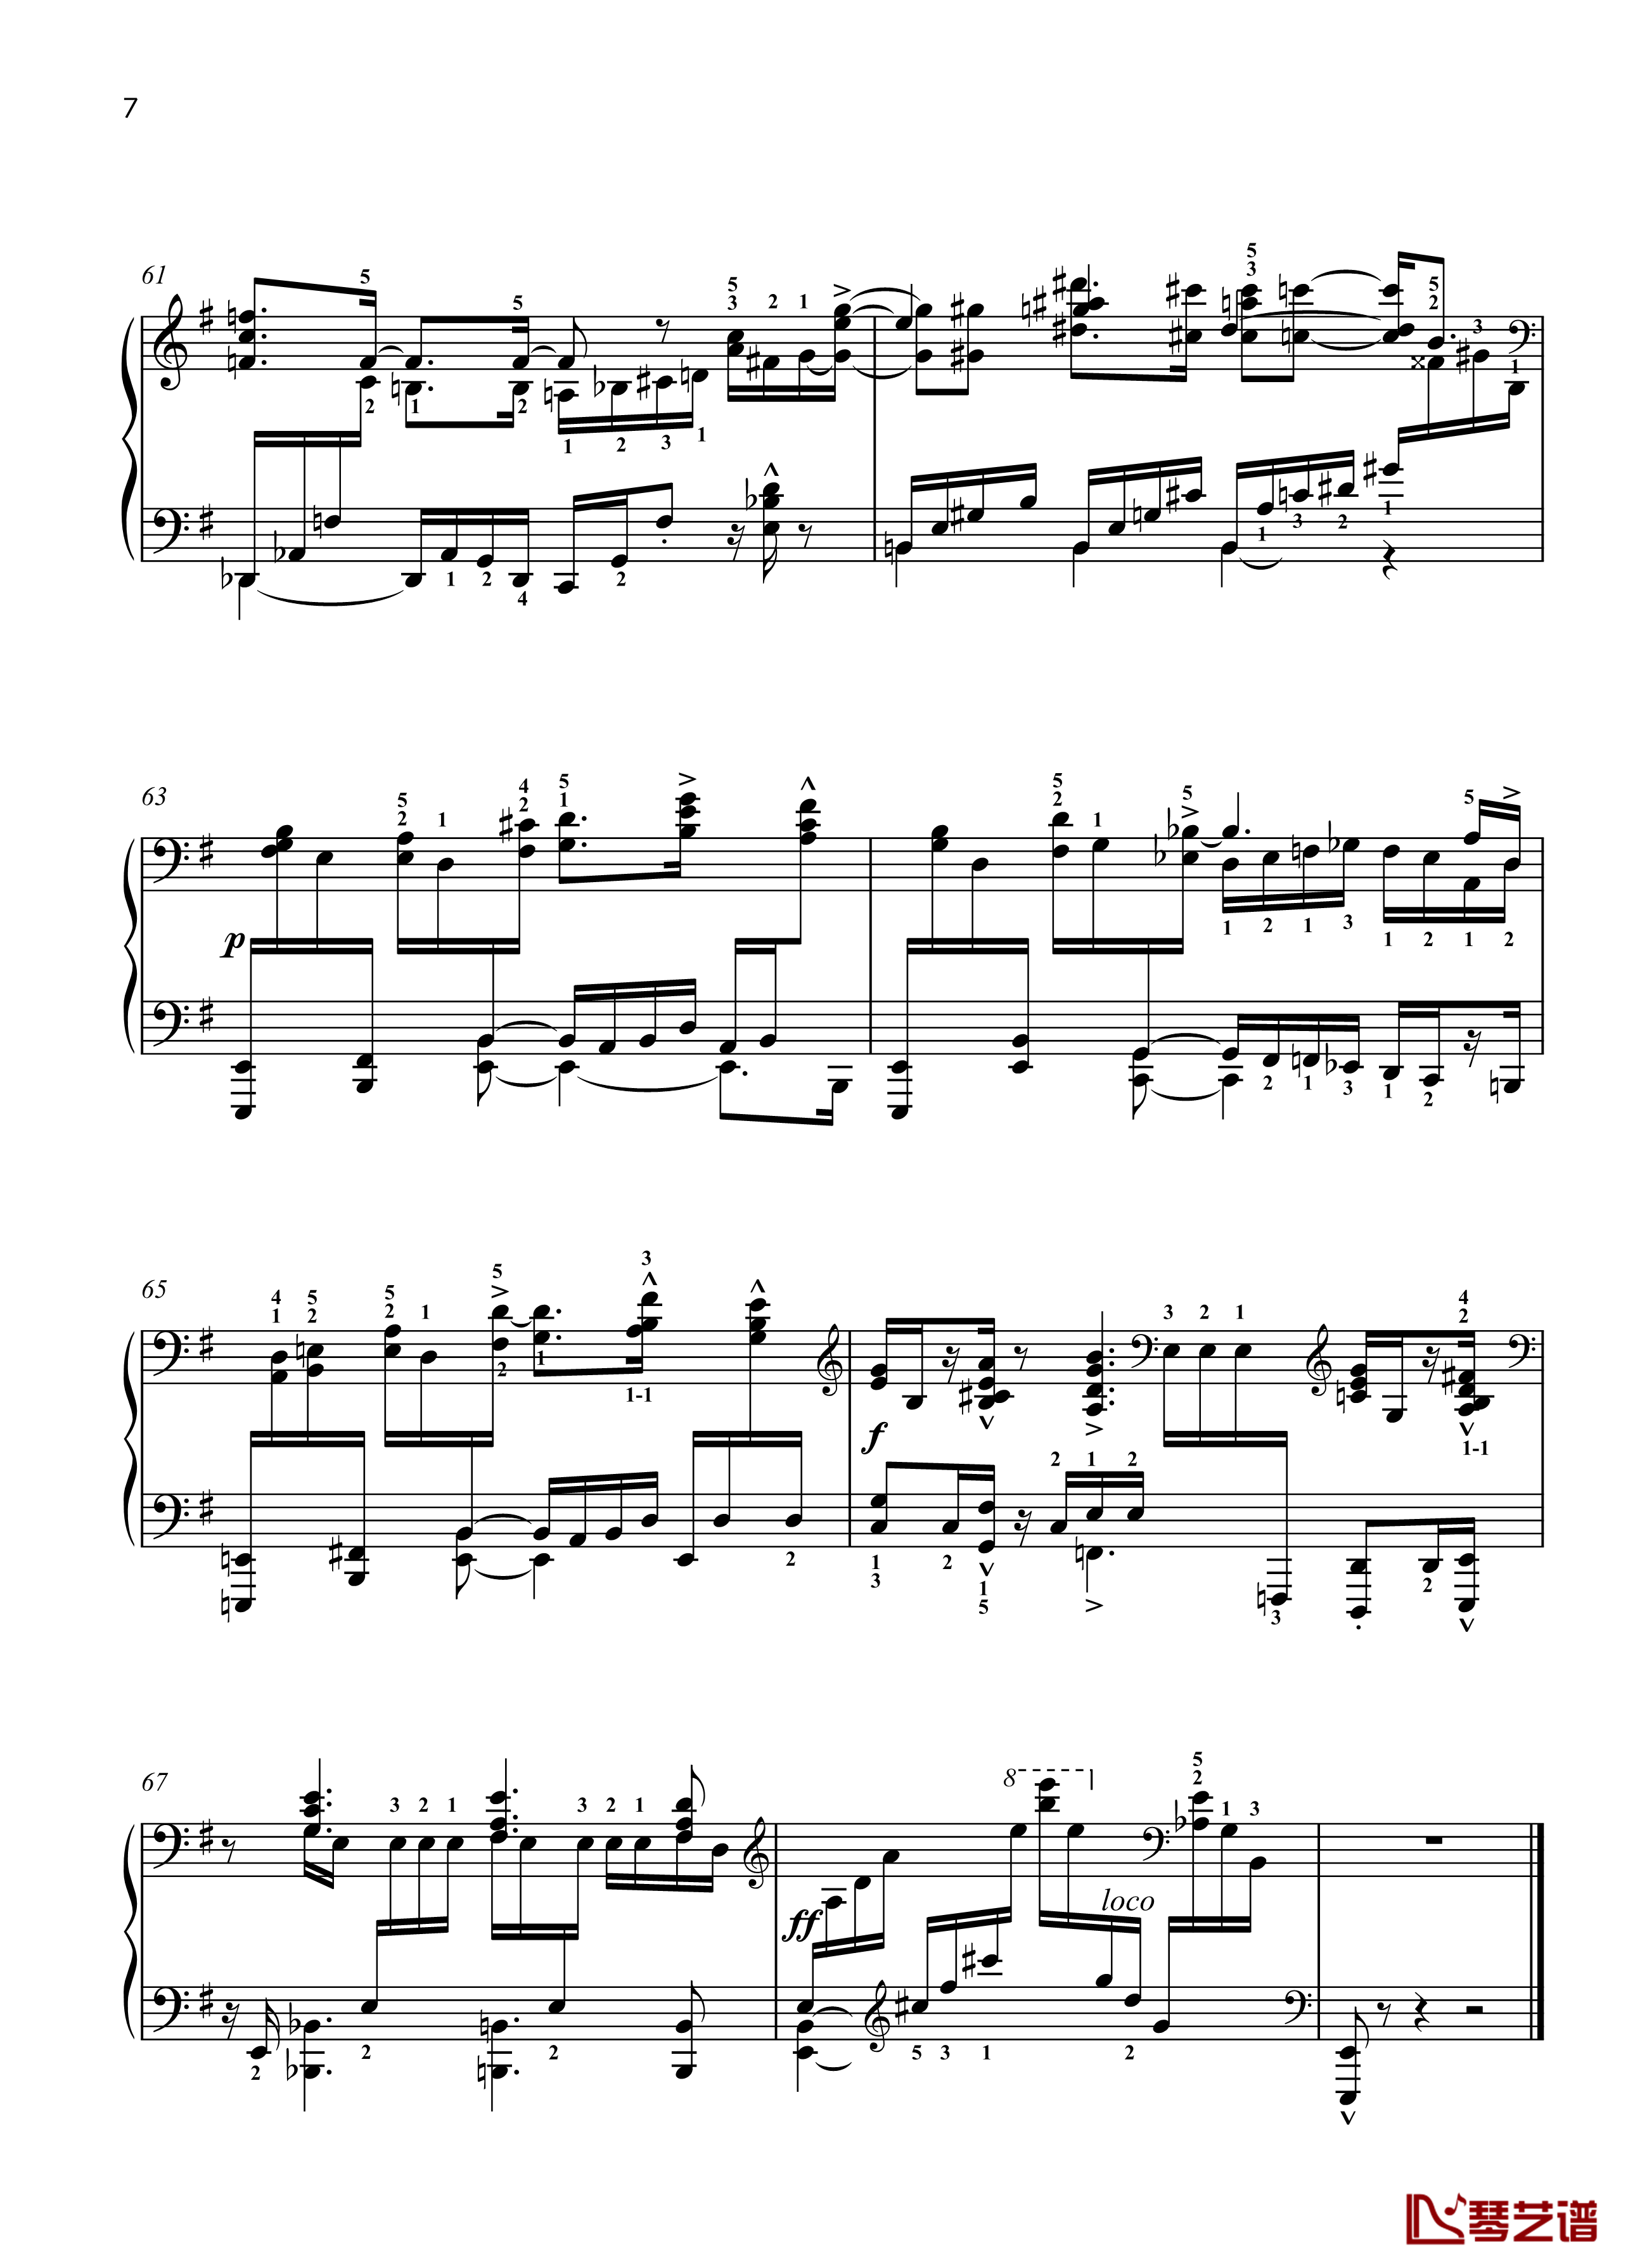 No. 3. Toccatina钢琴谱-带指法-八首音乐会练习曲 Eight Concert ?tudes Op 40-爵士-尼古拉·凯帕斯汀7